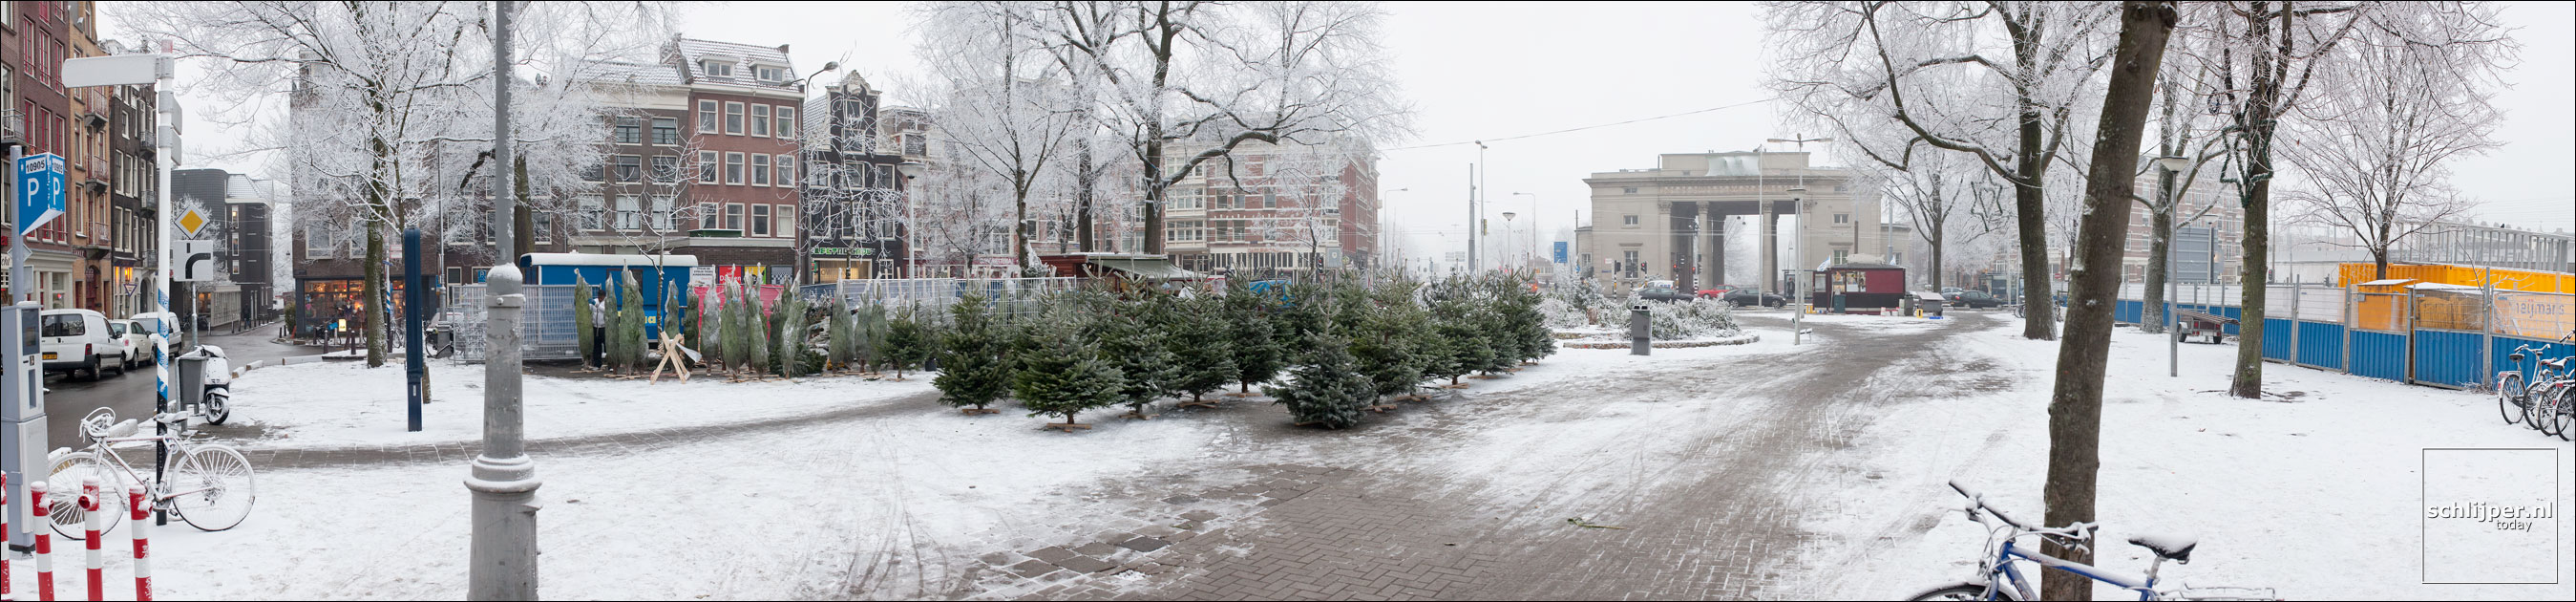 Nederland, Amsterdam, 7 december 2010